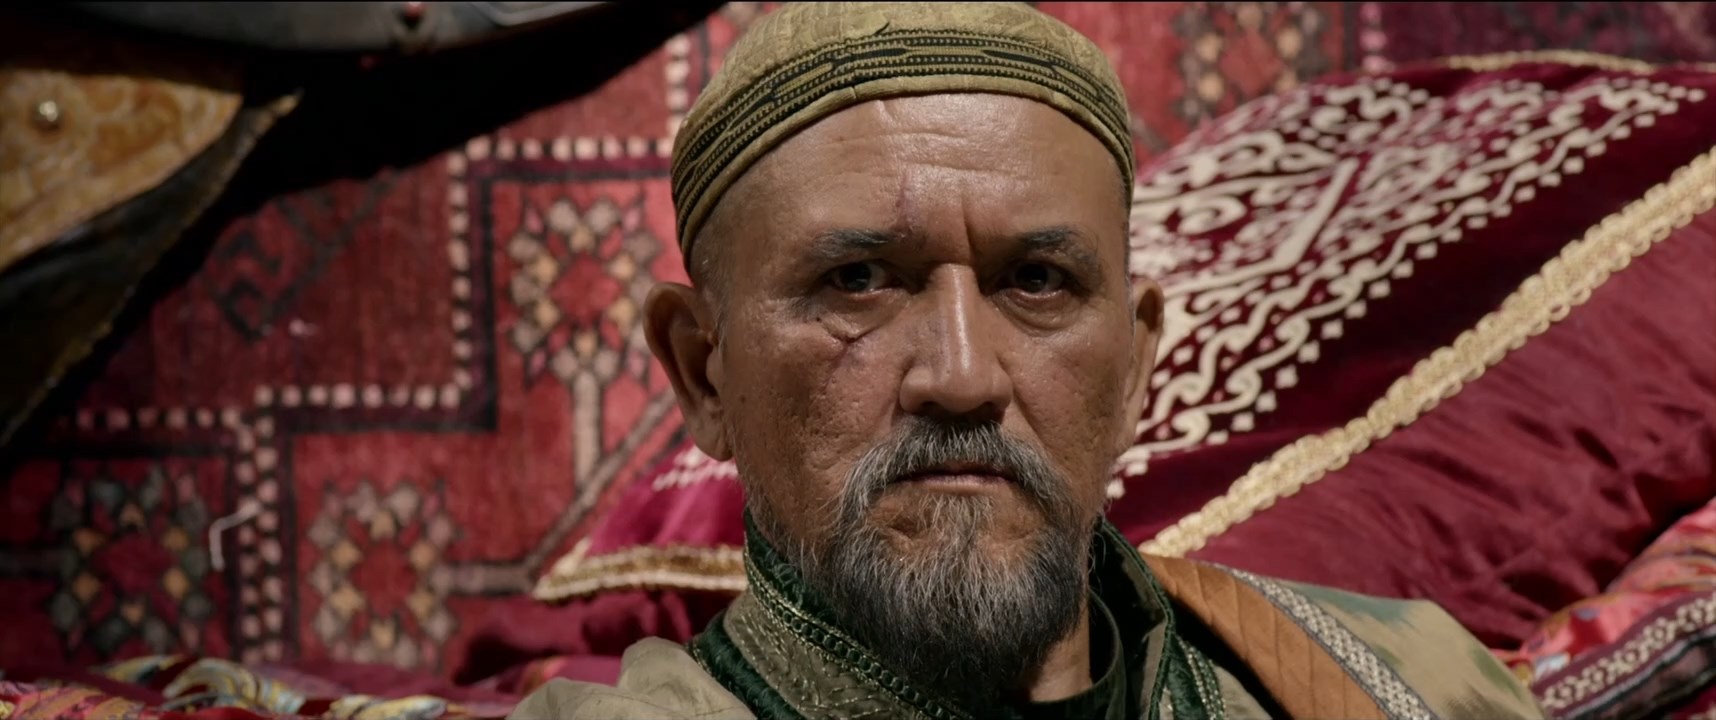 Kazakh-Khanate-The-Golden-Throne-2019-Telugu-Dubbed-Movie-Screen-Shot-1.jpeg